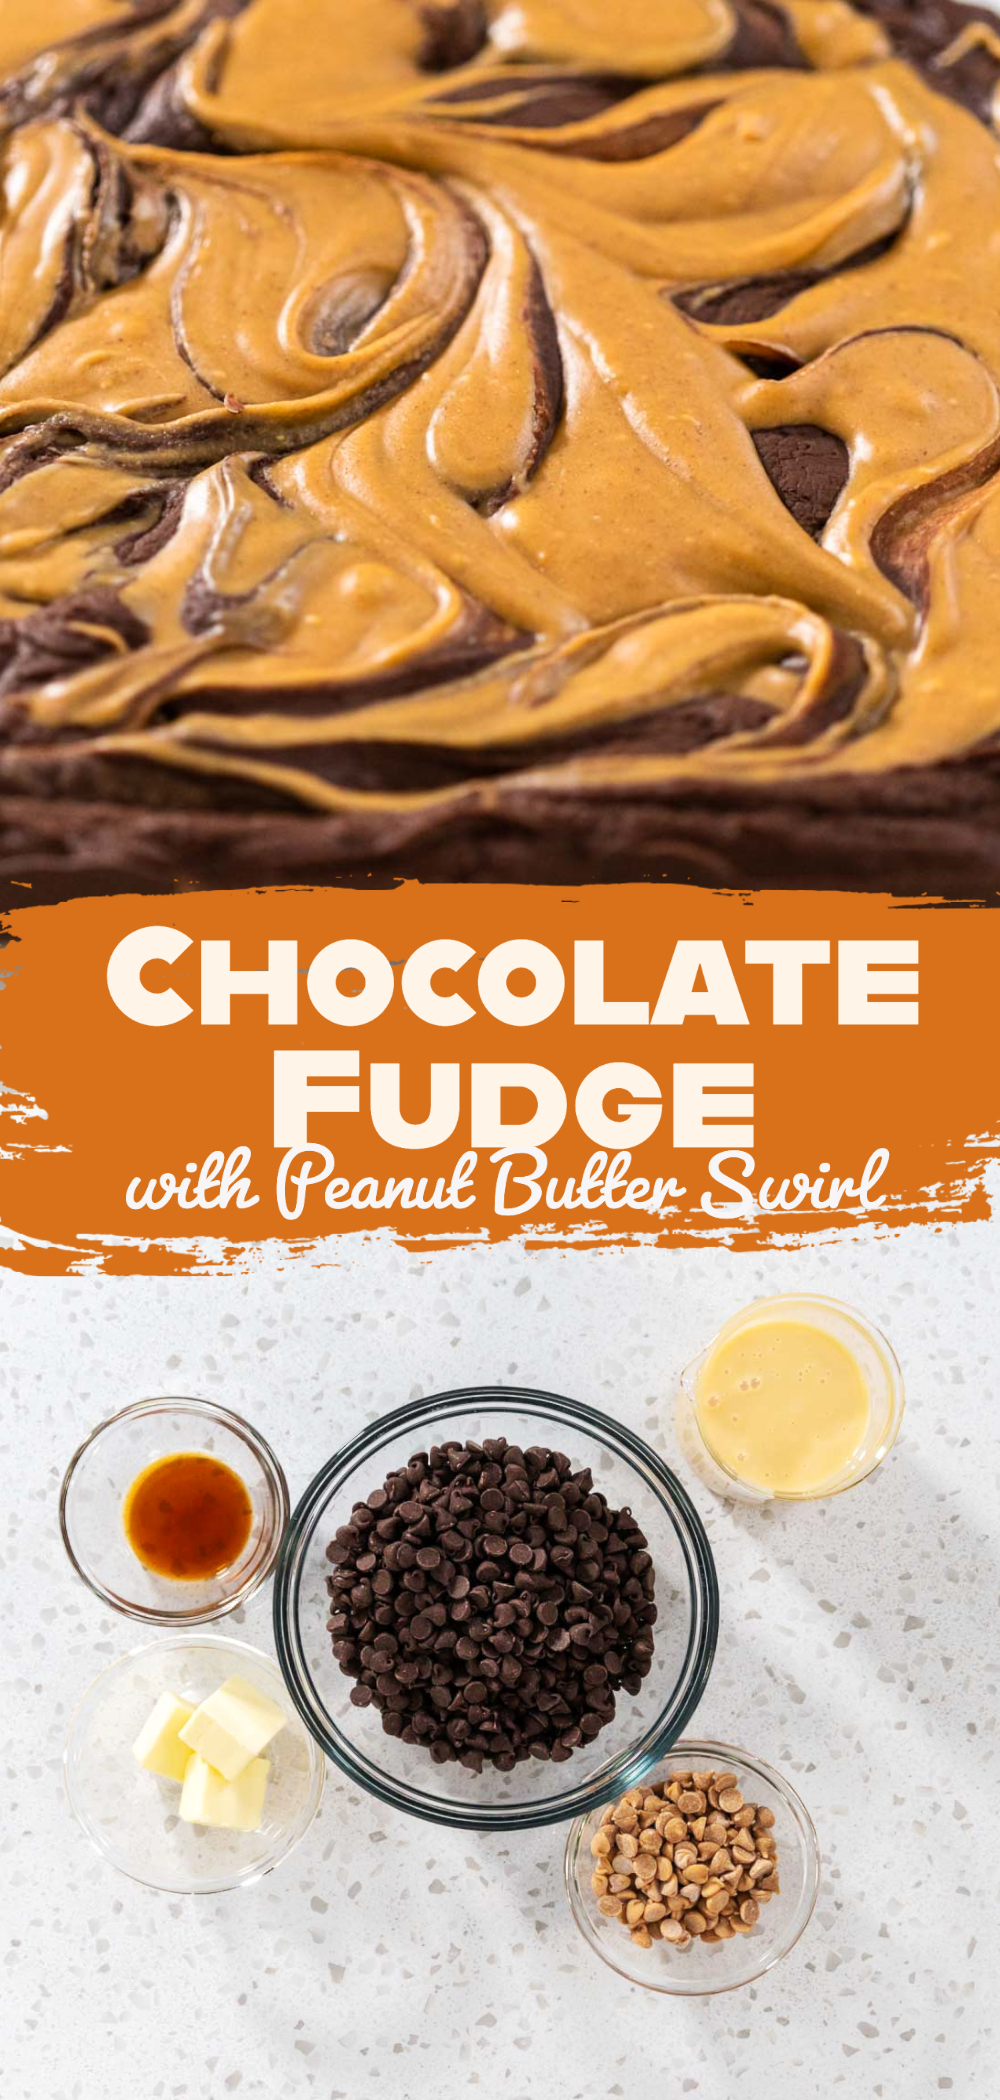 Chocolate Fudge with Peanut Butter Swirl